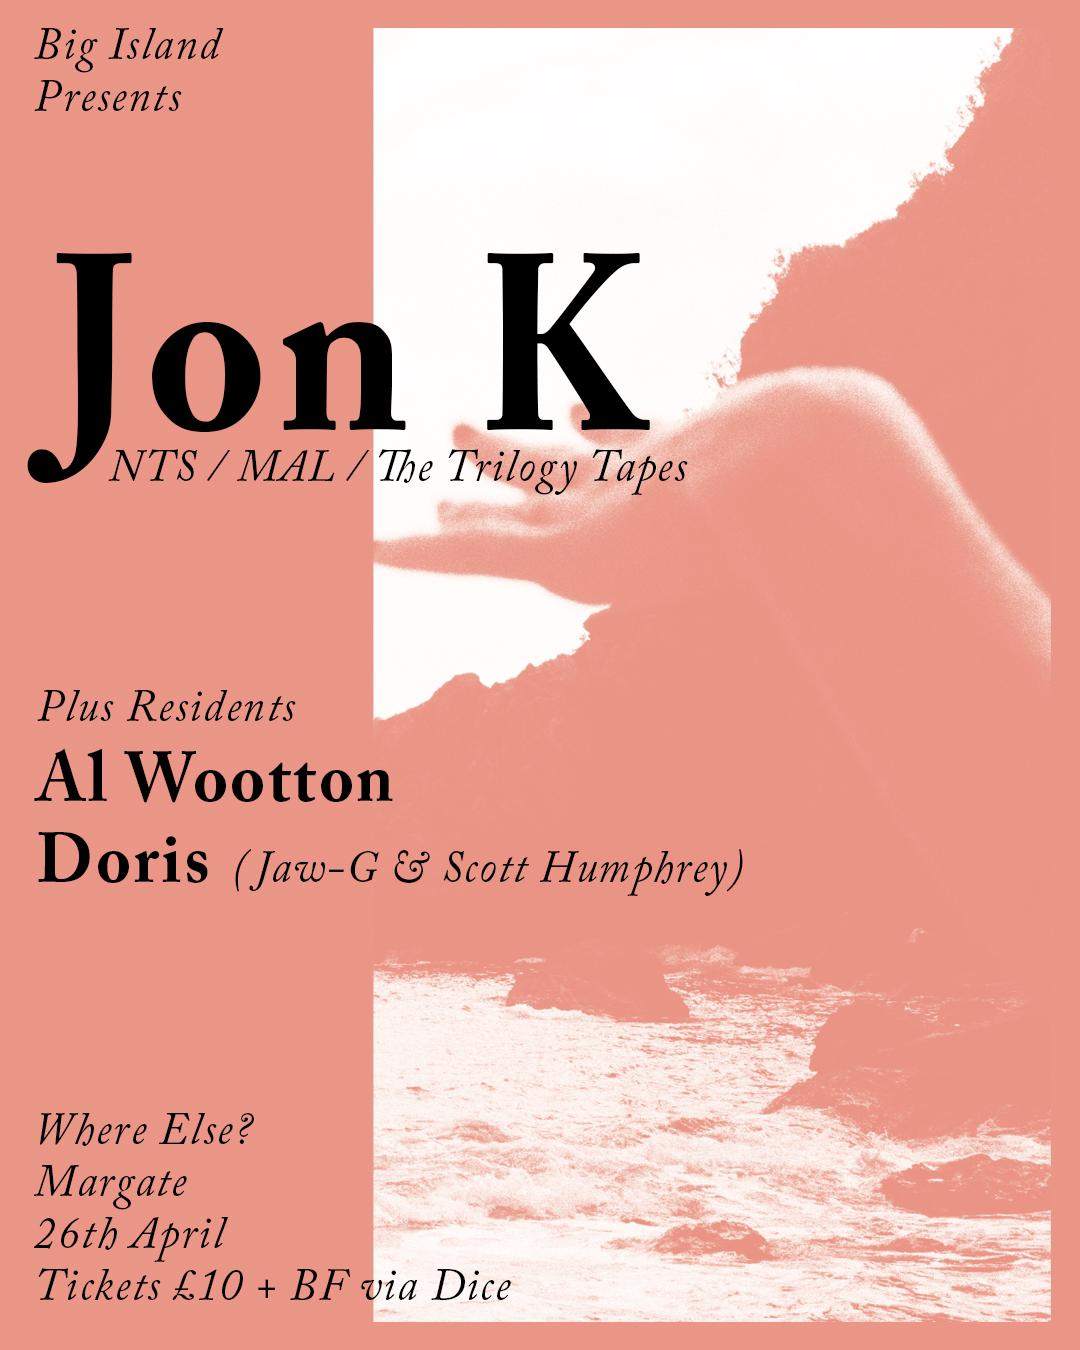 Big Island presents Jon K - Página frontal